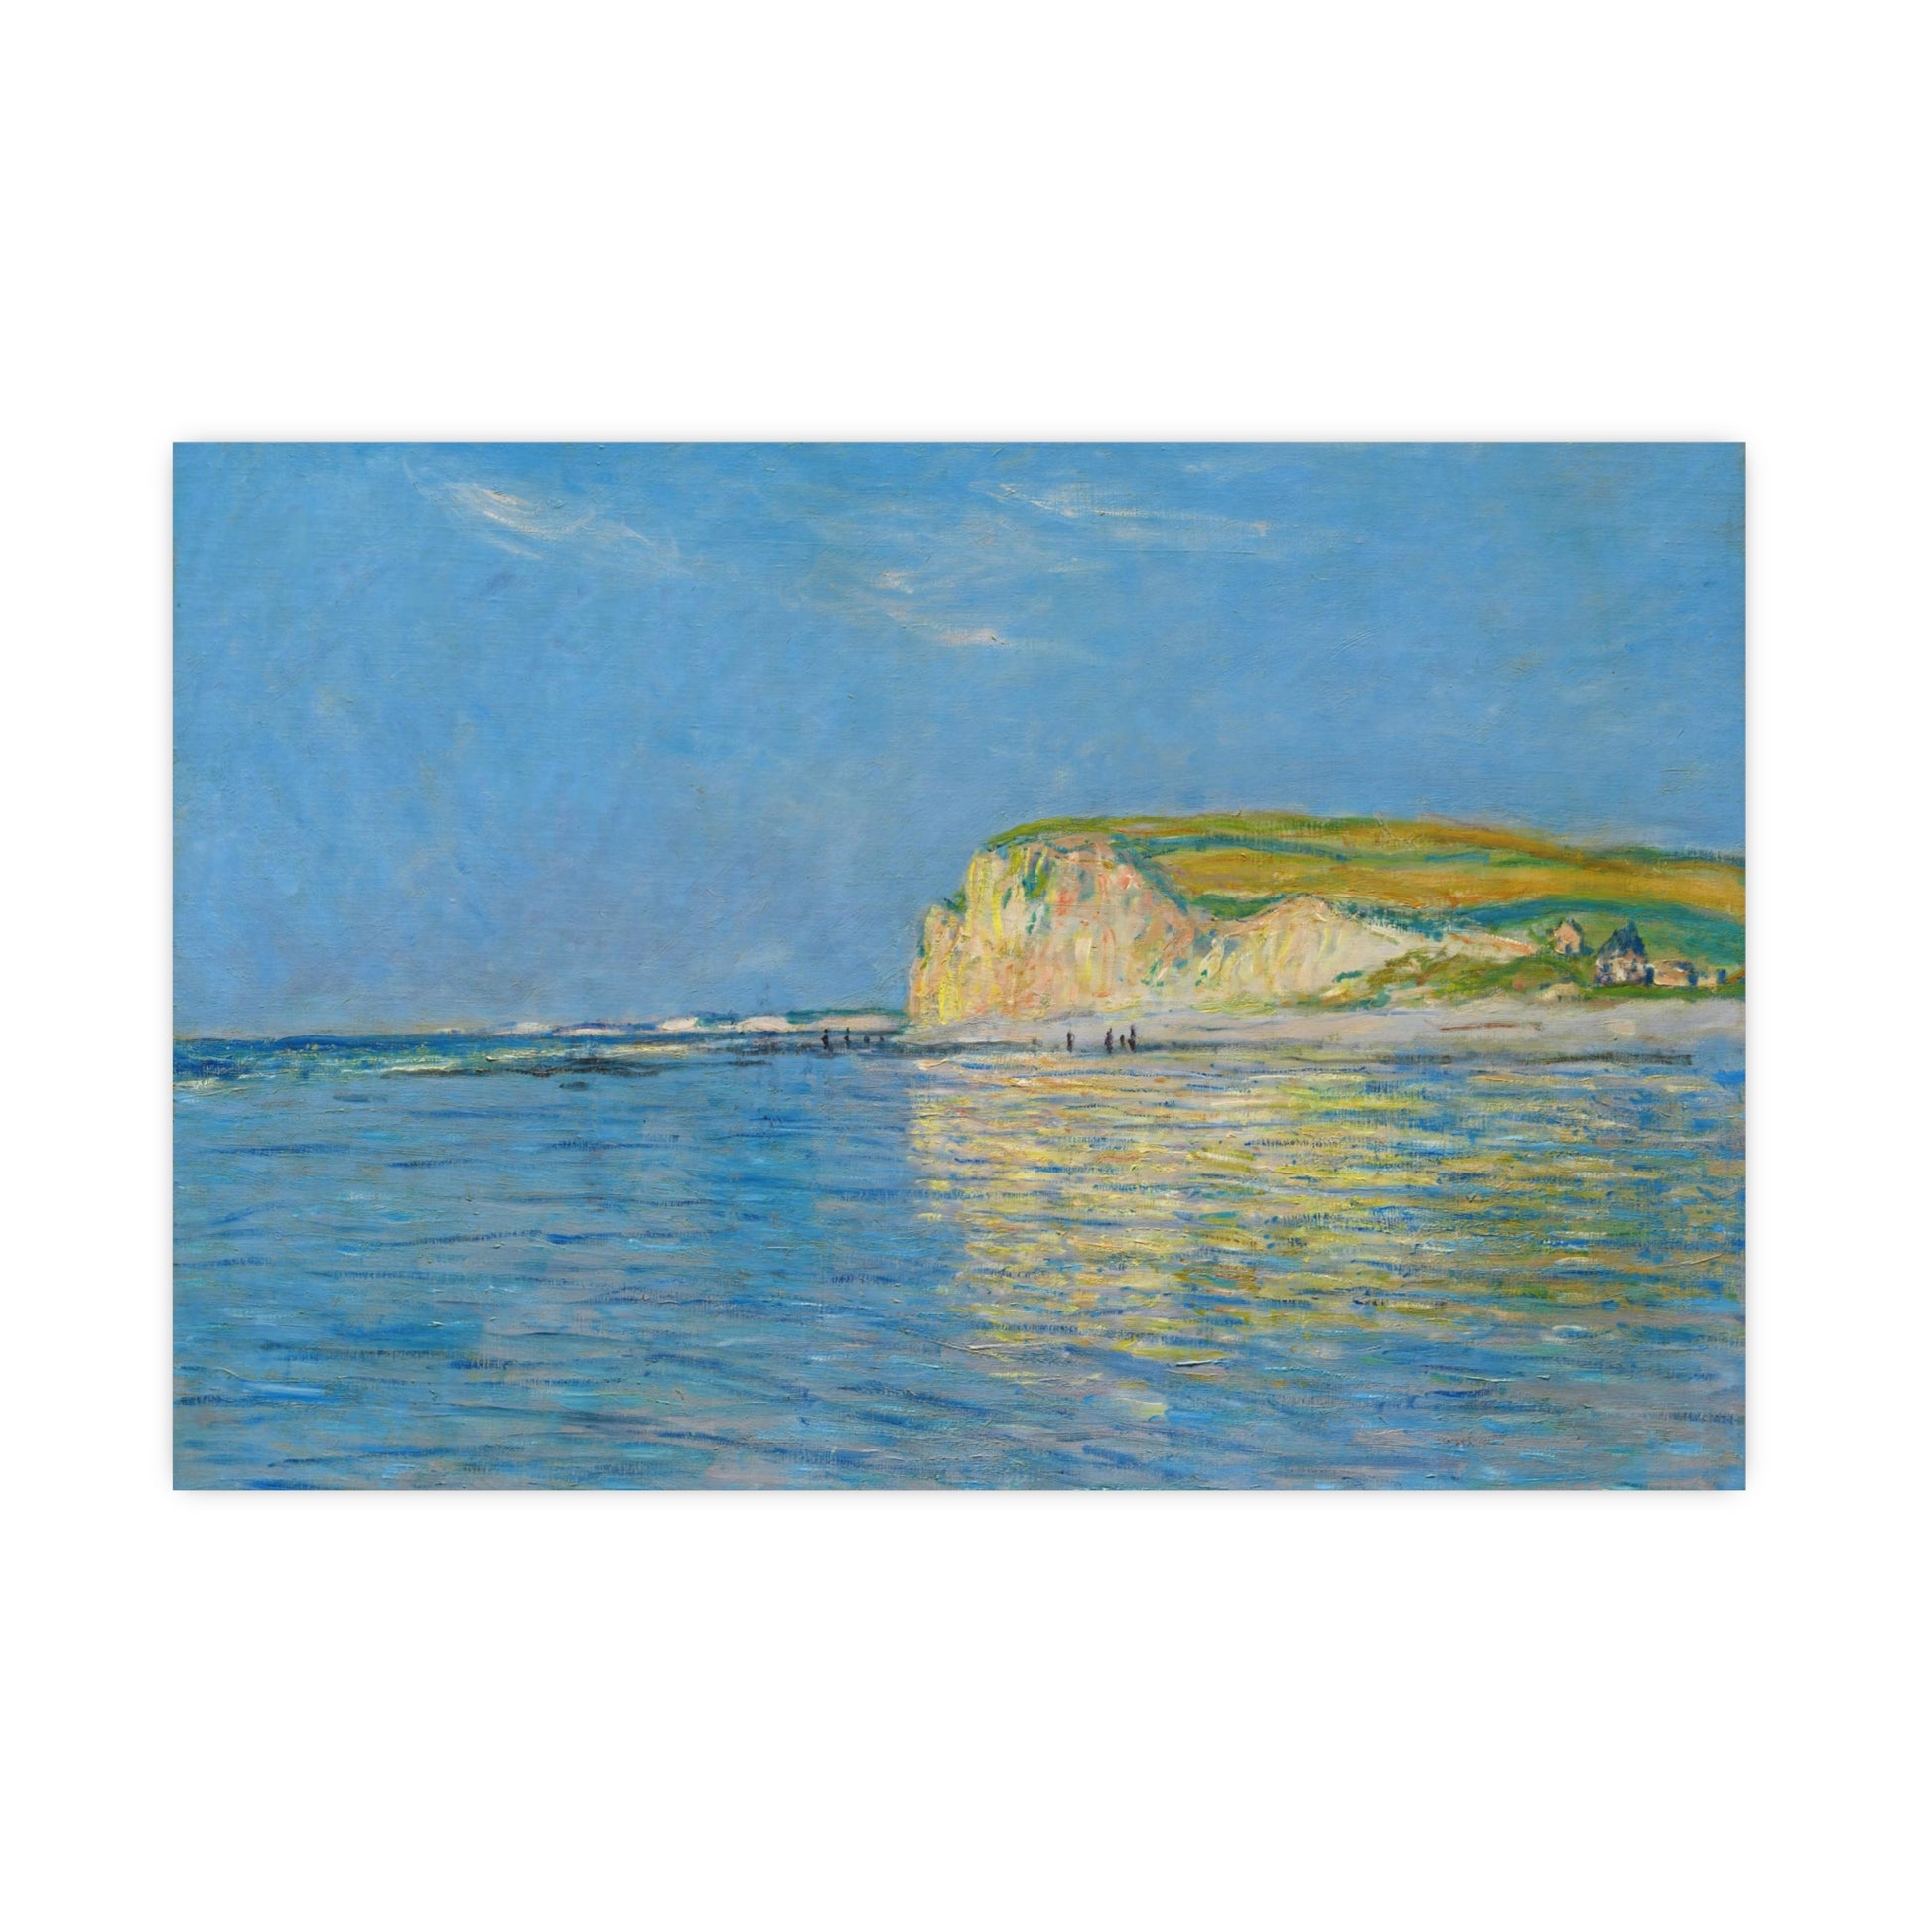   Claude Monet's "Low Tide at Pourville, near Dieppe (1882)  digitally enhanced by Lisa Burningham designs